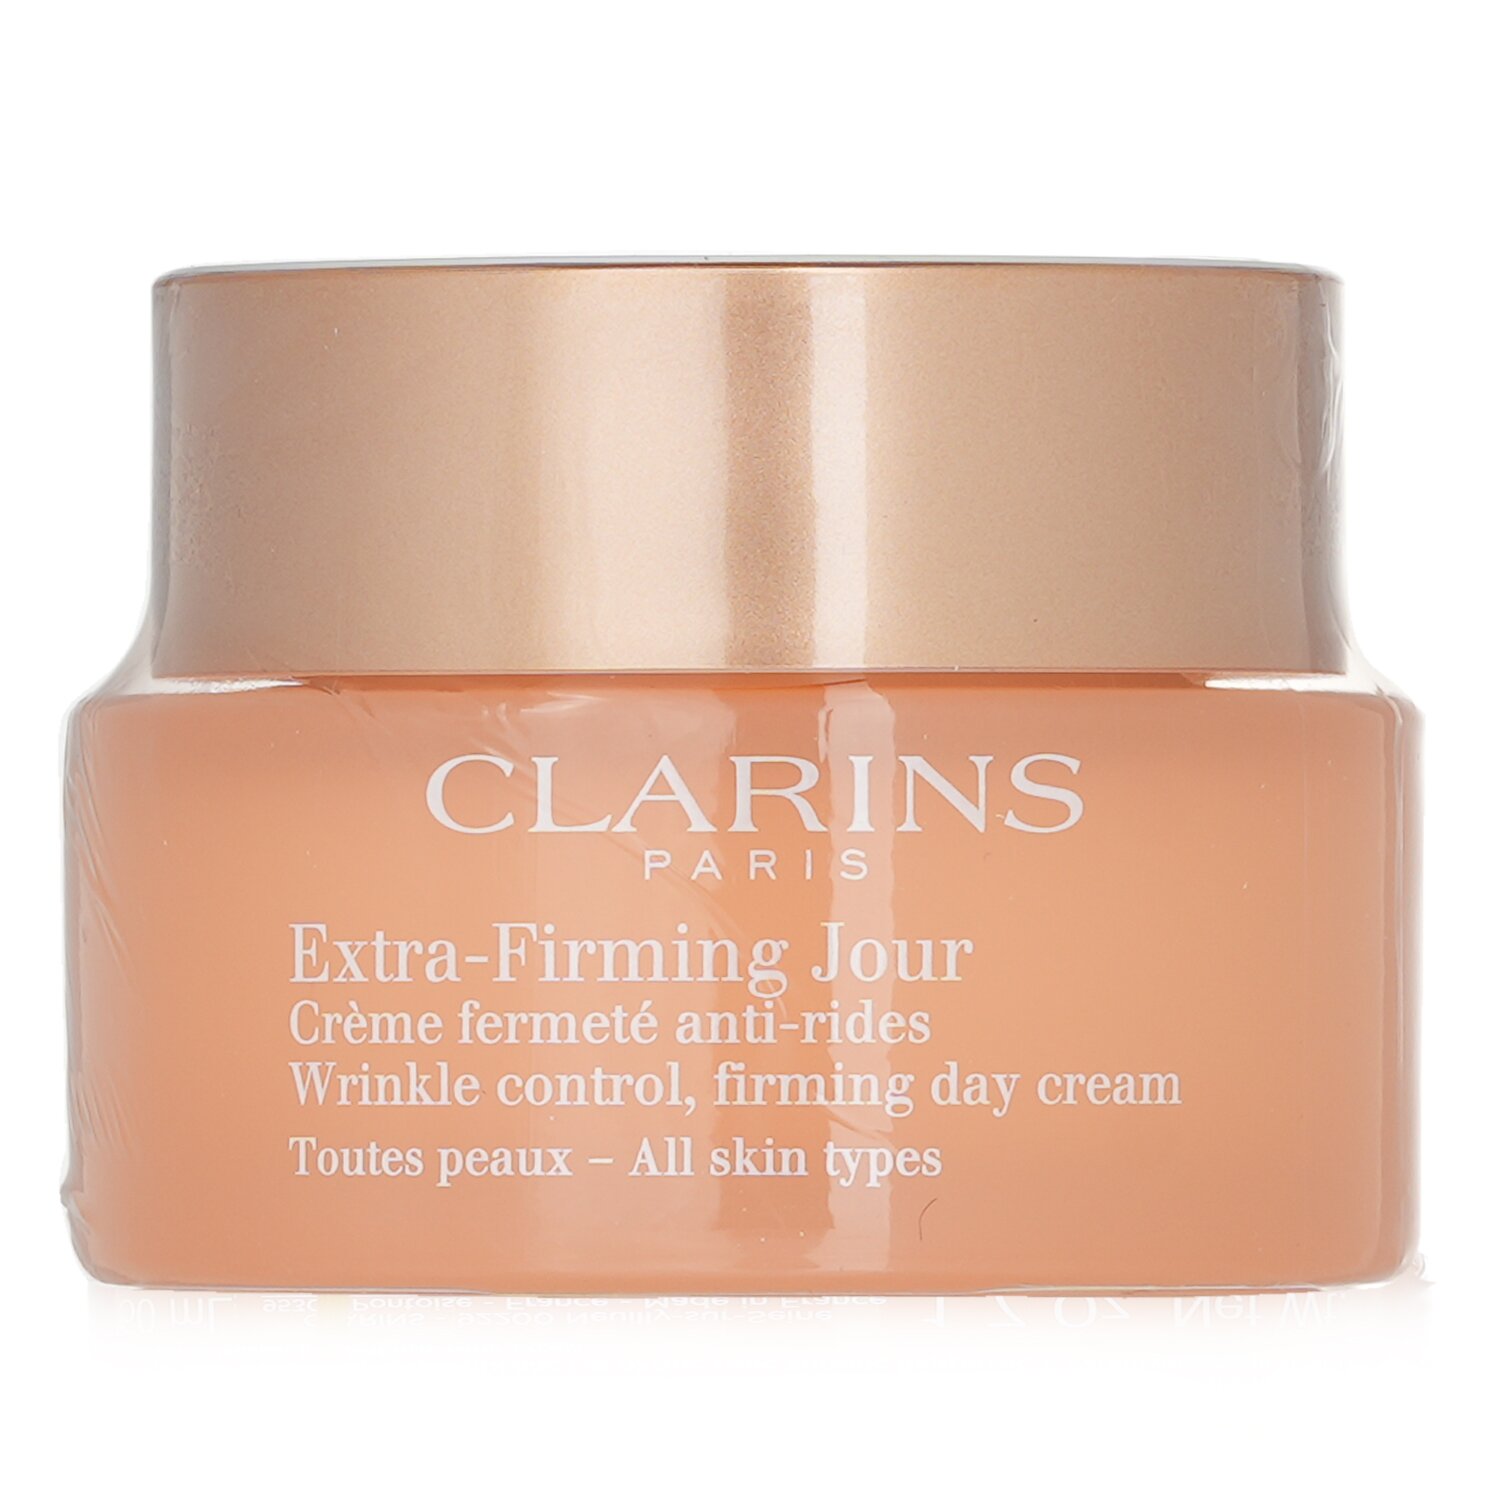 Clarins Extra-Firming Jour Wrinkle Control, Firming Day Cream - Todos os Tipos de Pele 50ml/1.7oz